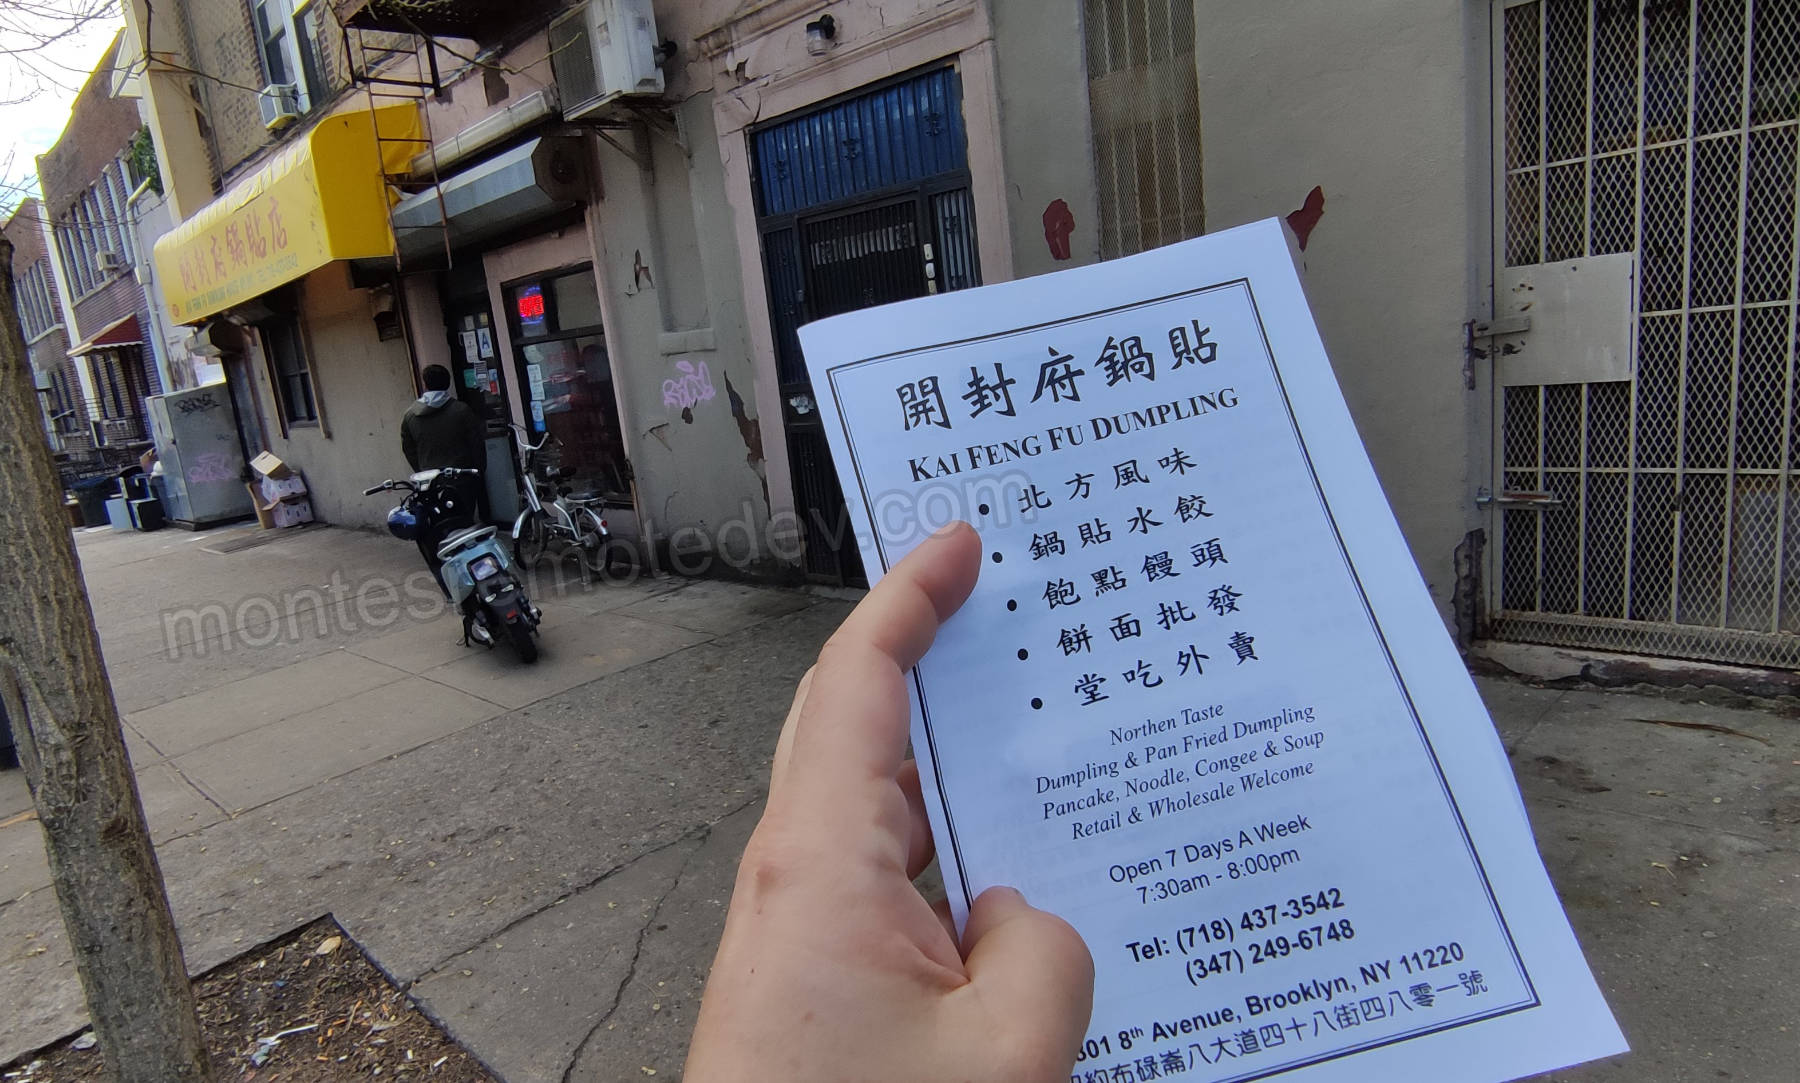 NYC Kai Feng Du Dumplings